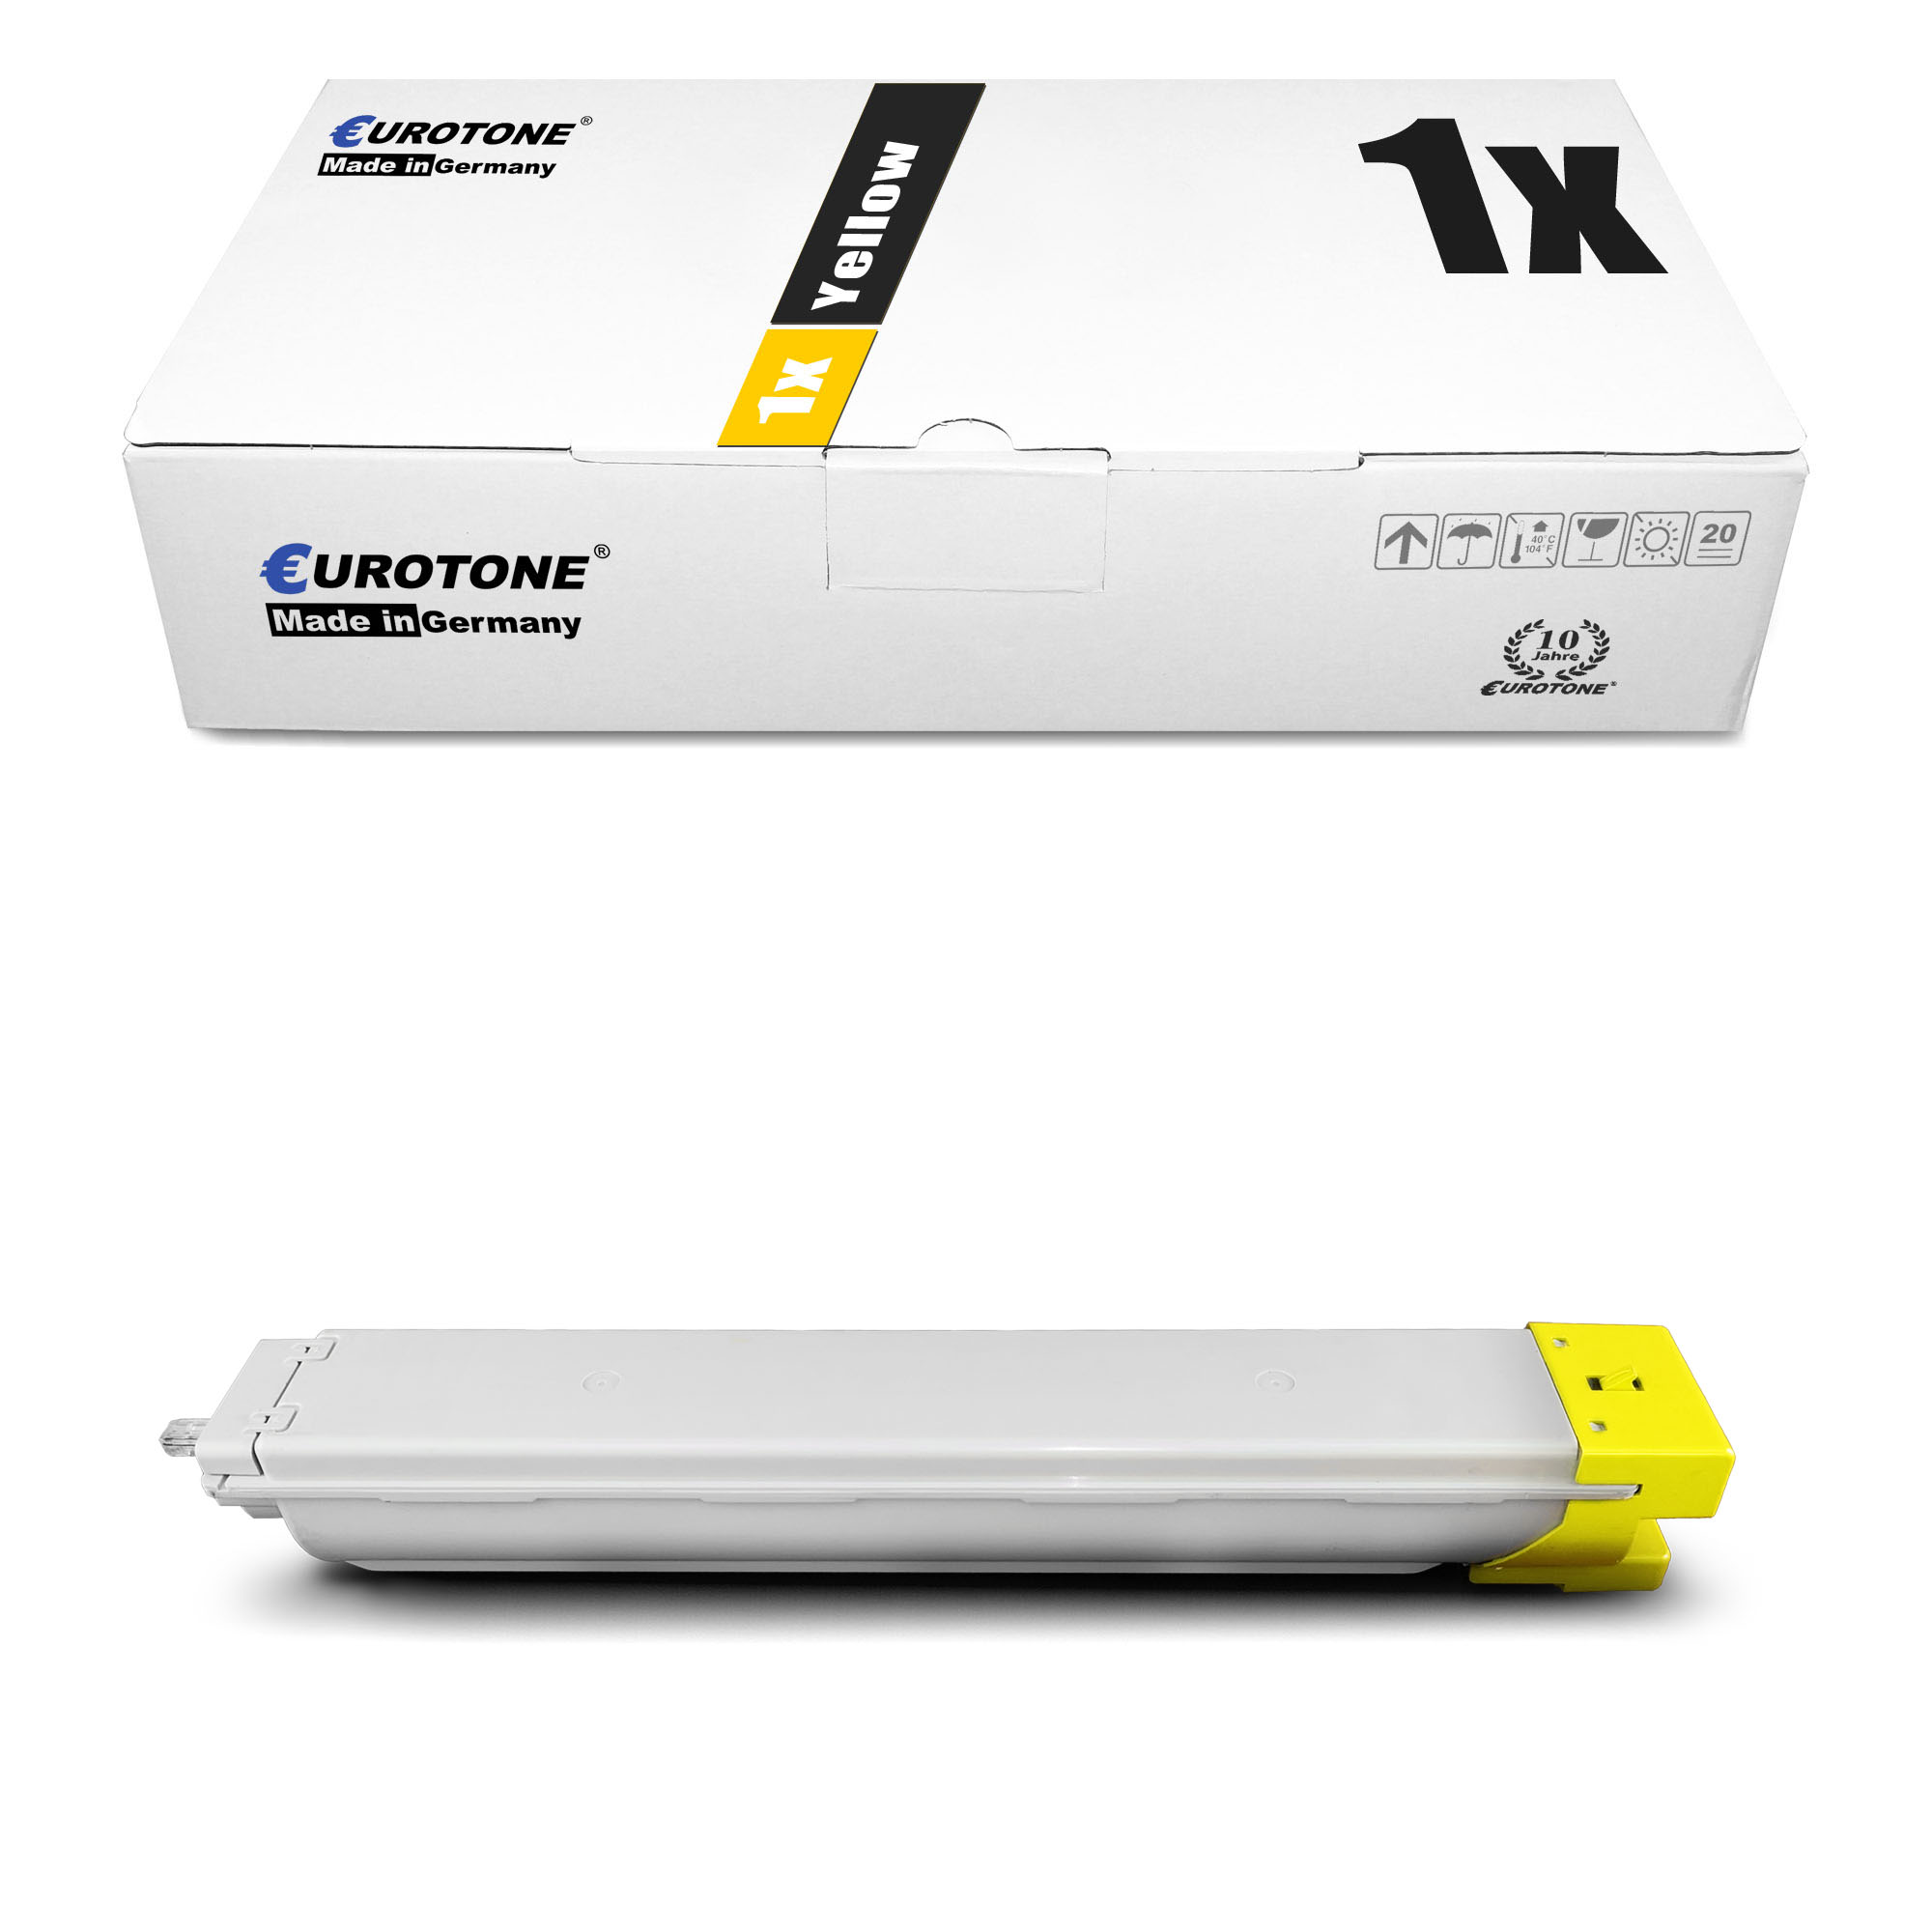 EUROTONE X4200 1xY Toner / Cartridge (Samsung SS735A) CLT-Y808S Yellow